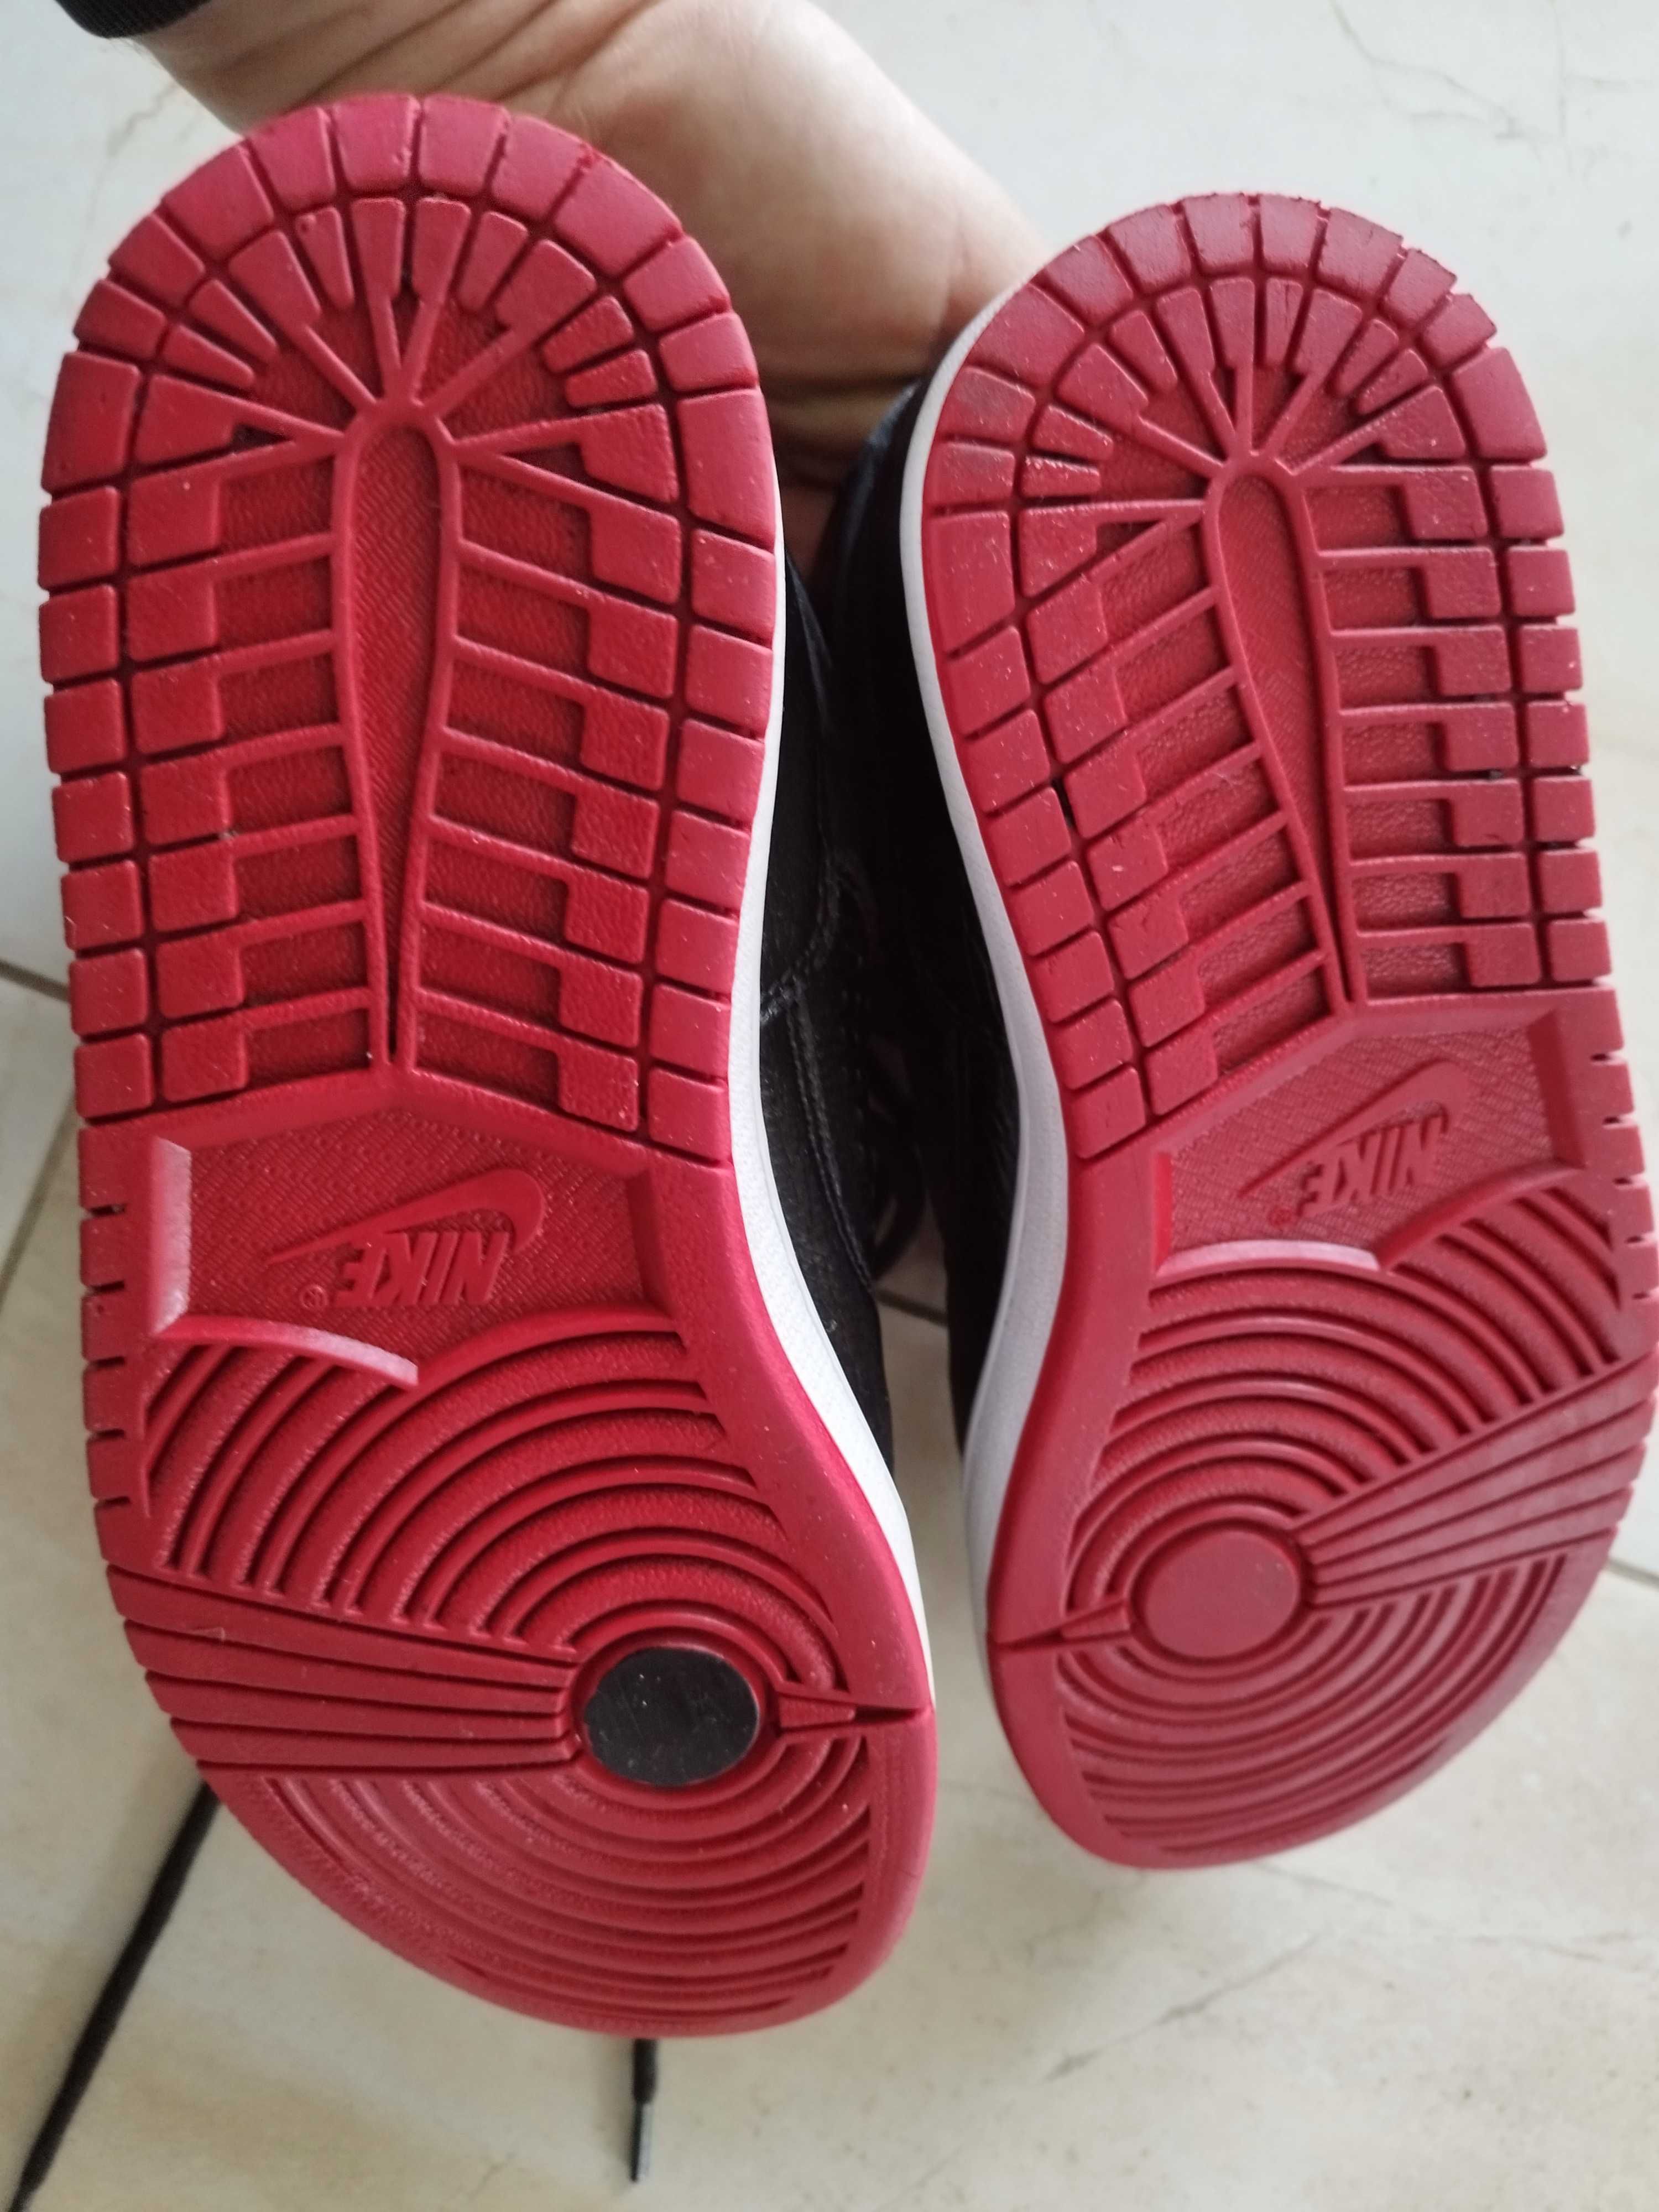 Nike Air Jordan Jumpman Access Black Gym Red 38,5 24cm